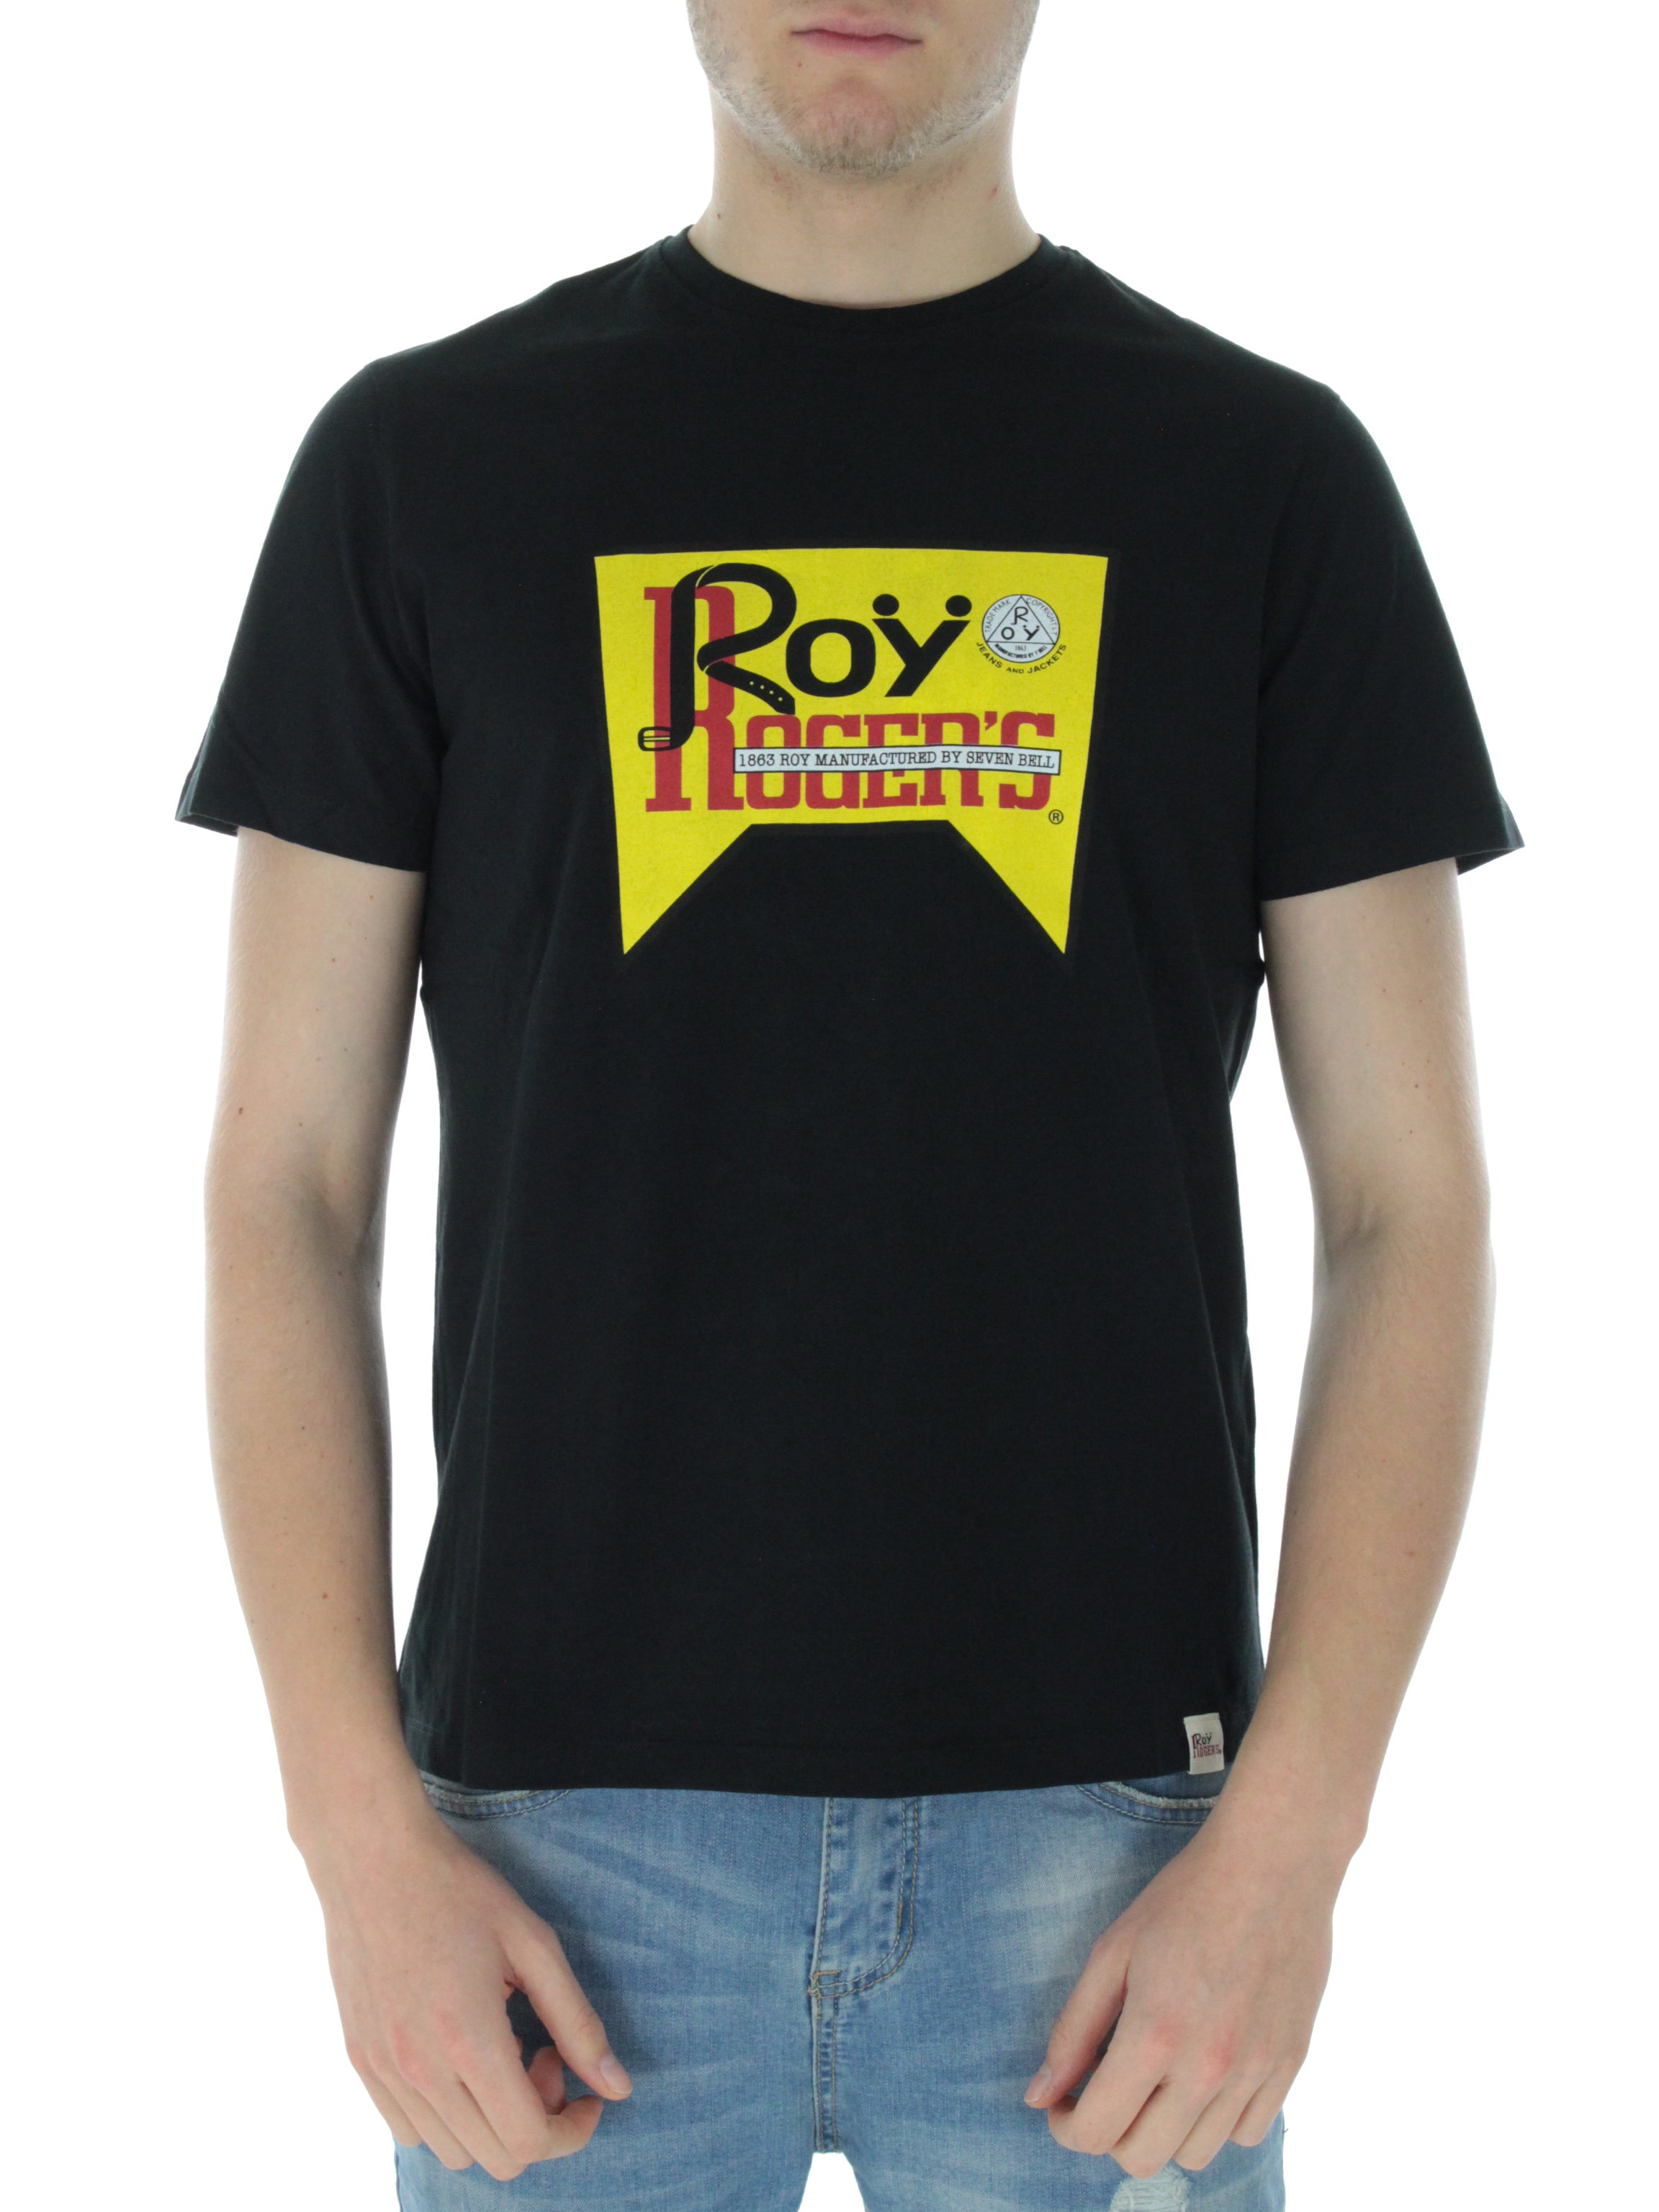 Roy roger's t-shirt